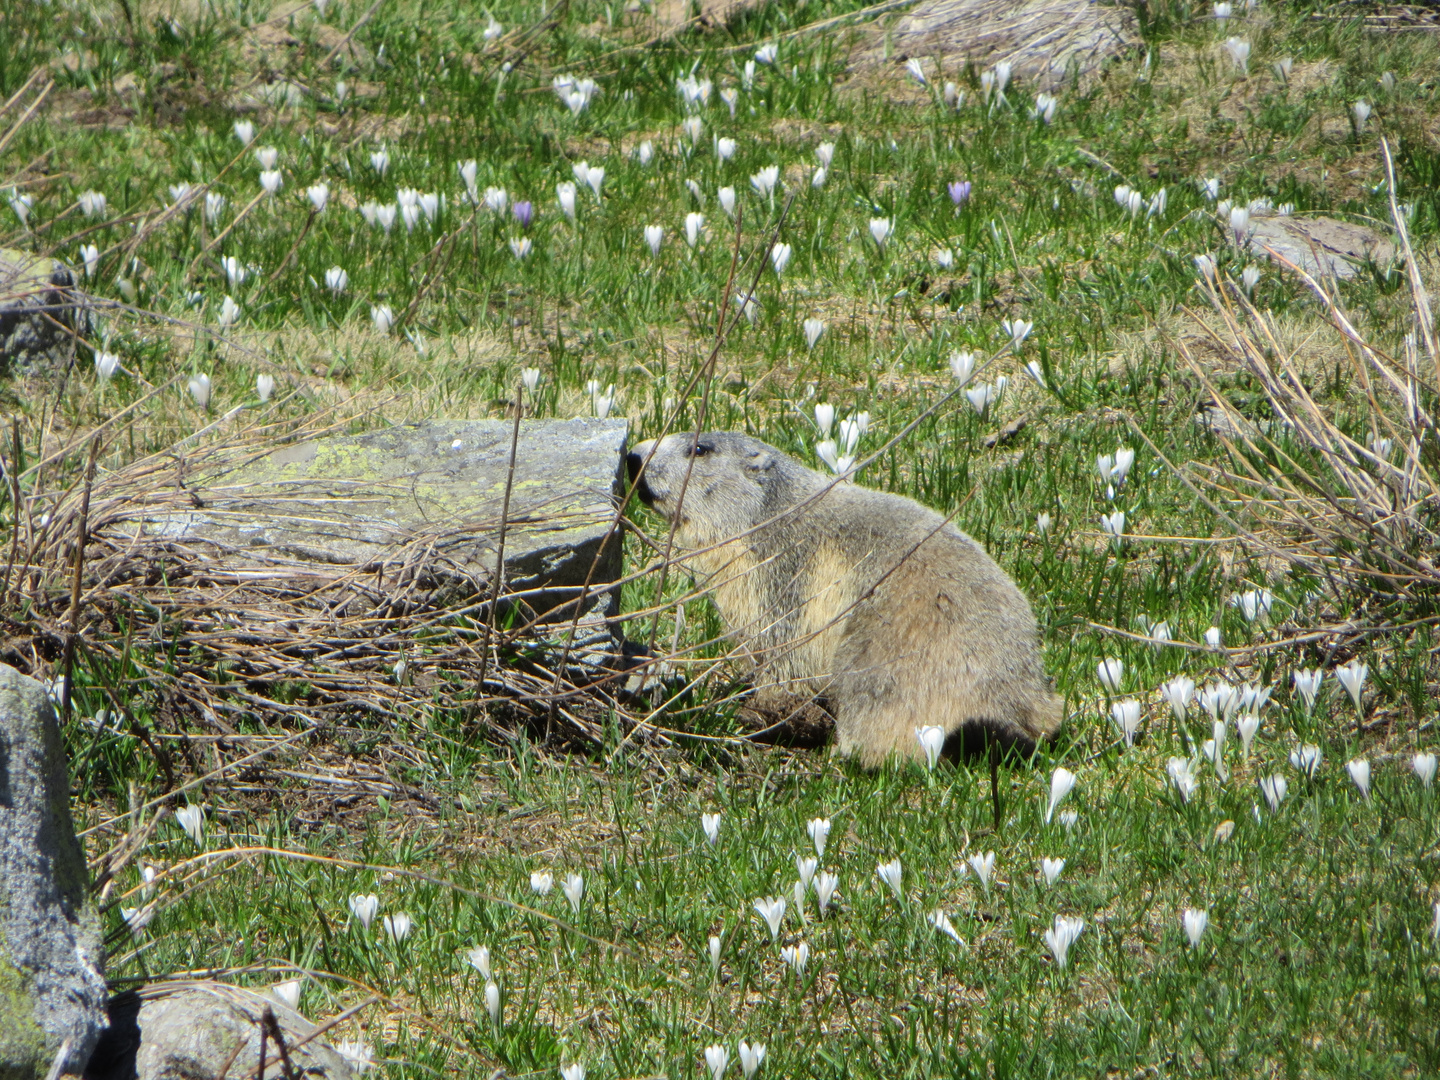 Marmotta